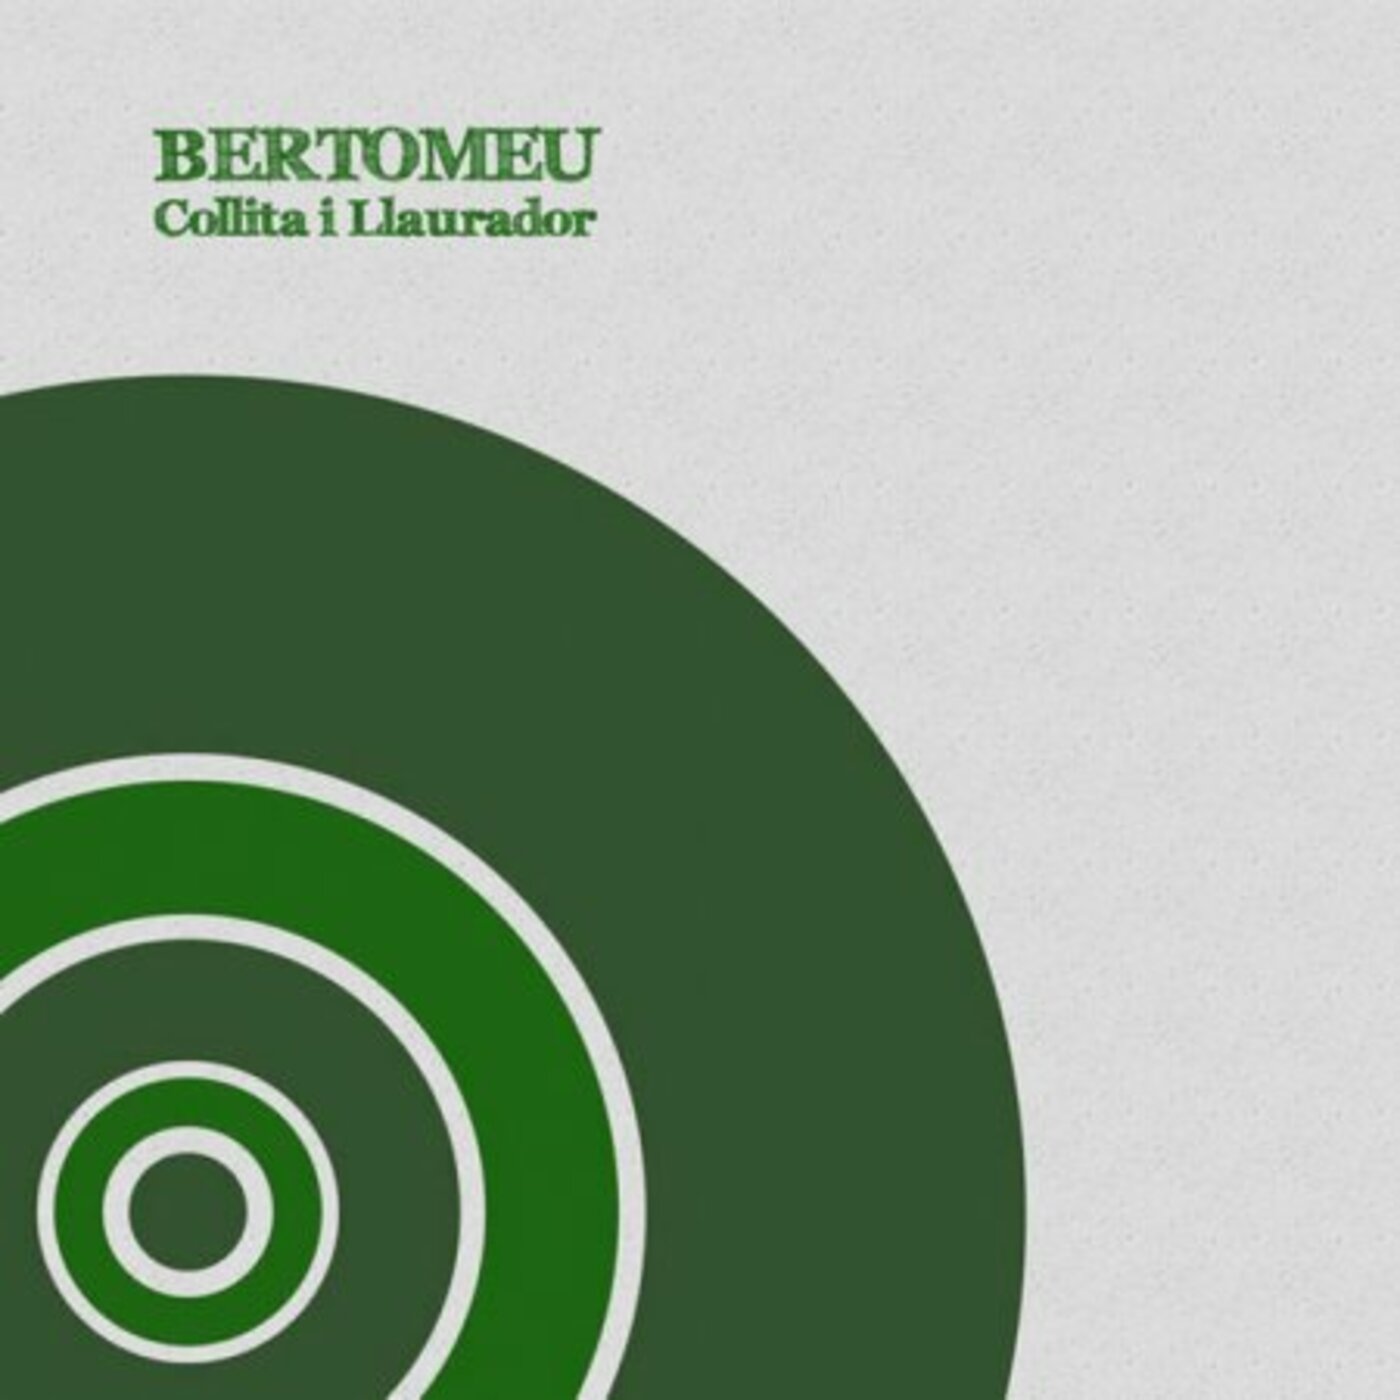 Bertomeu - Collita i llaurador | musica en valencià